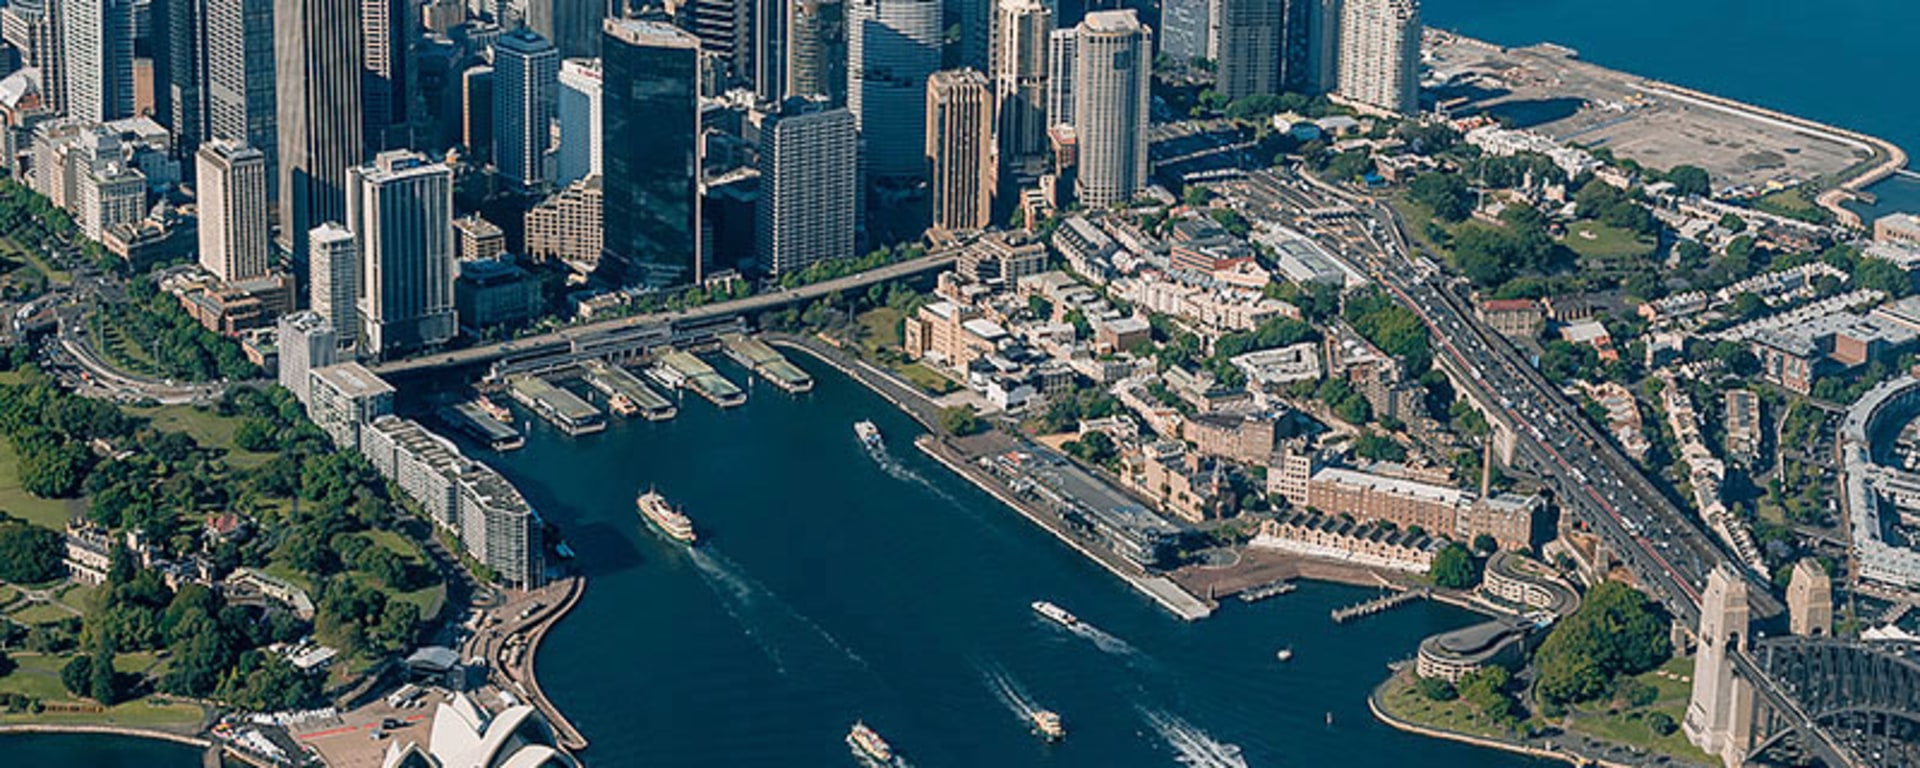 Vontobel in Sydney - View of the city of Sydney